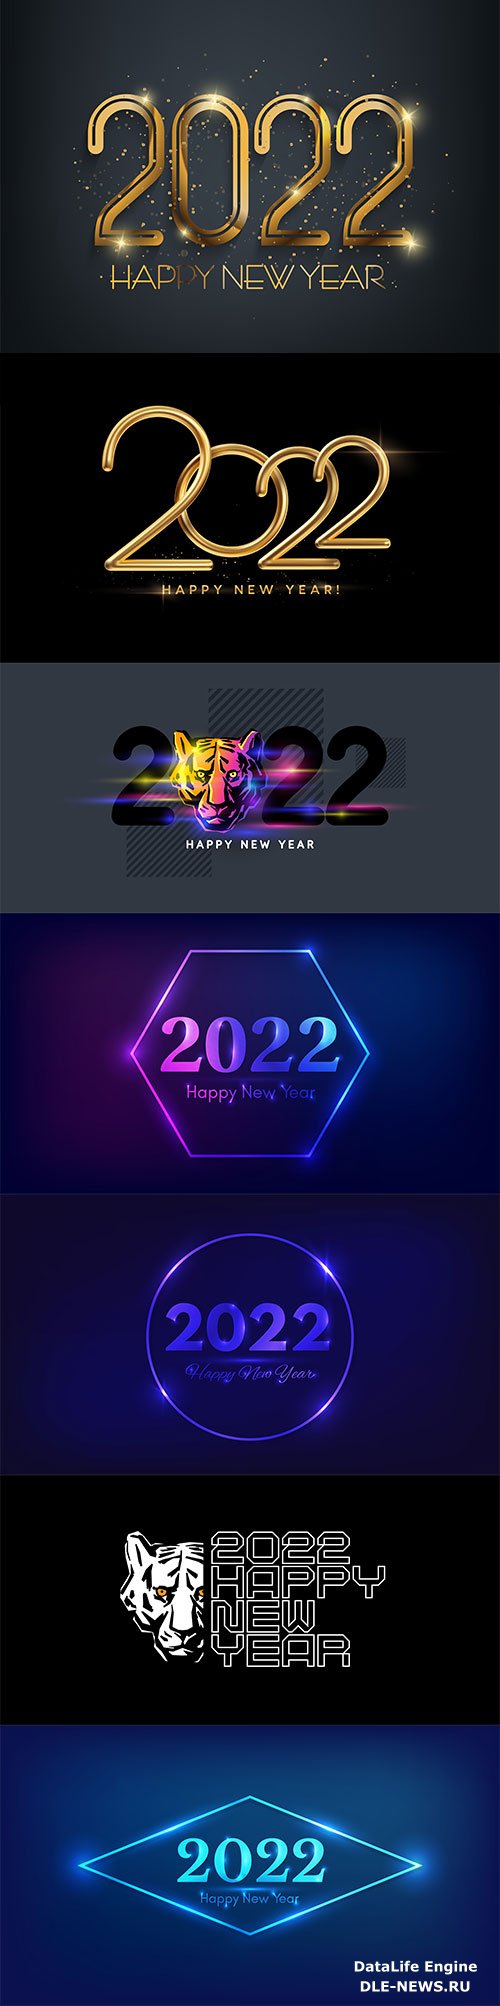 2022 New year, Merry christmas editable text effect premium vector vol 8